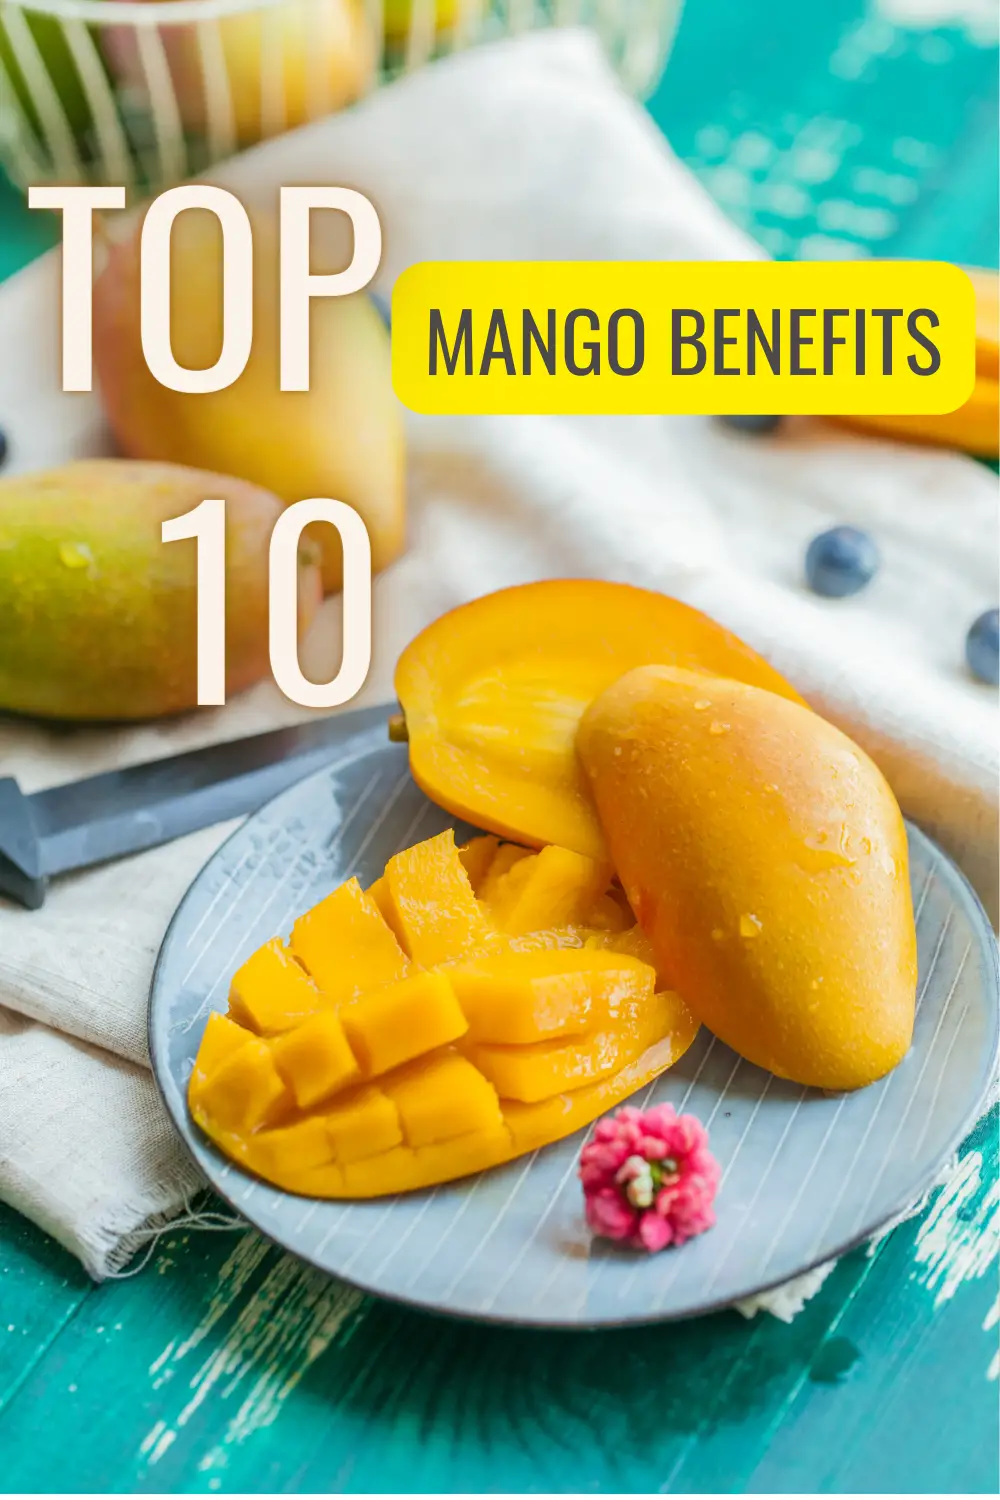 Top 10 Mango Benefits